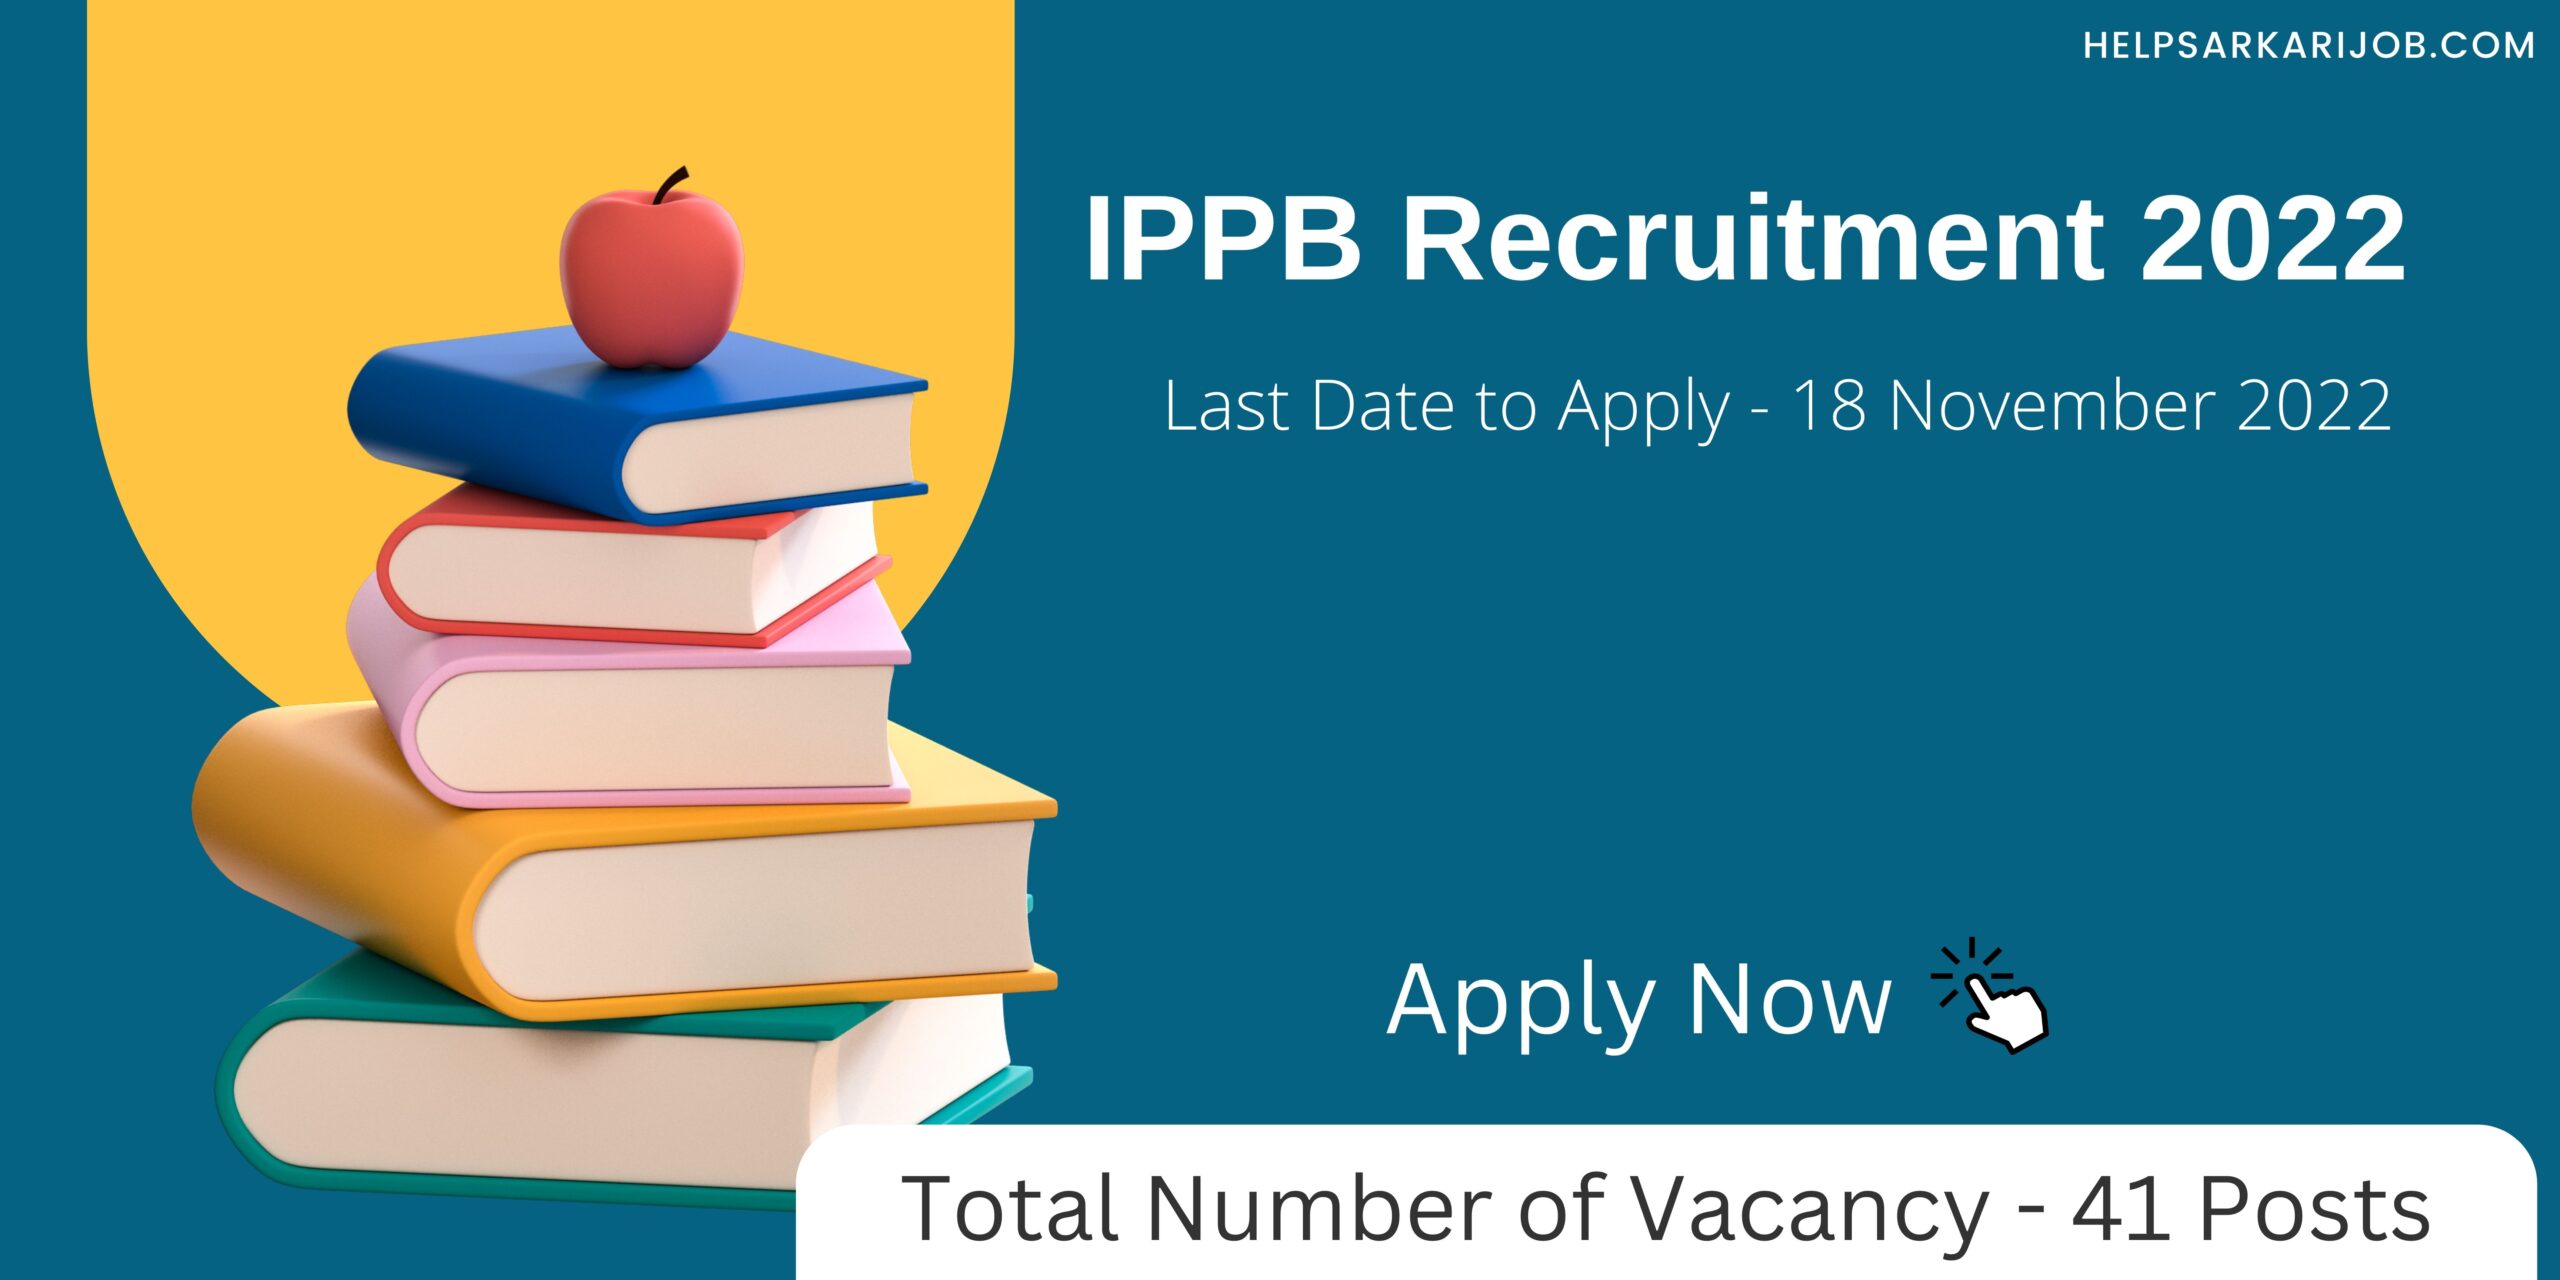 IPPB Recruitment 2022 Full Information